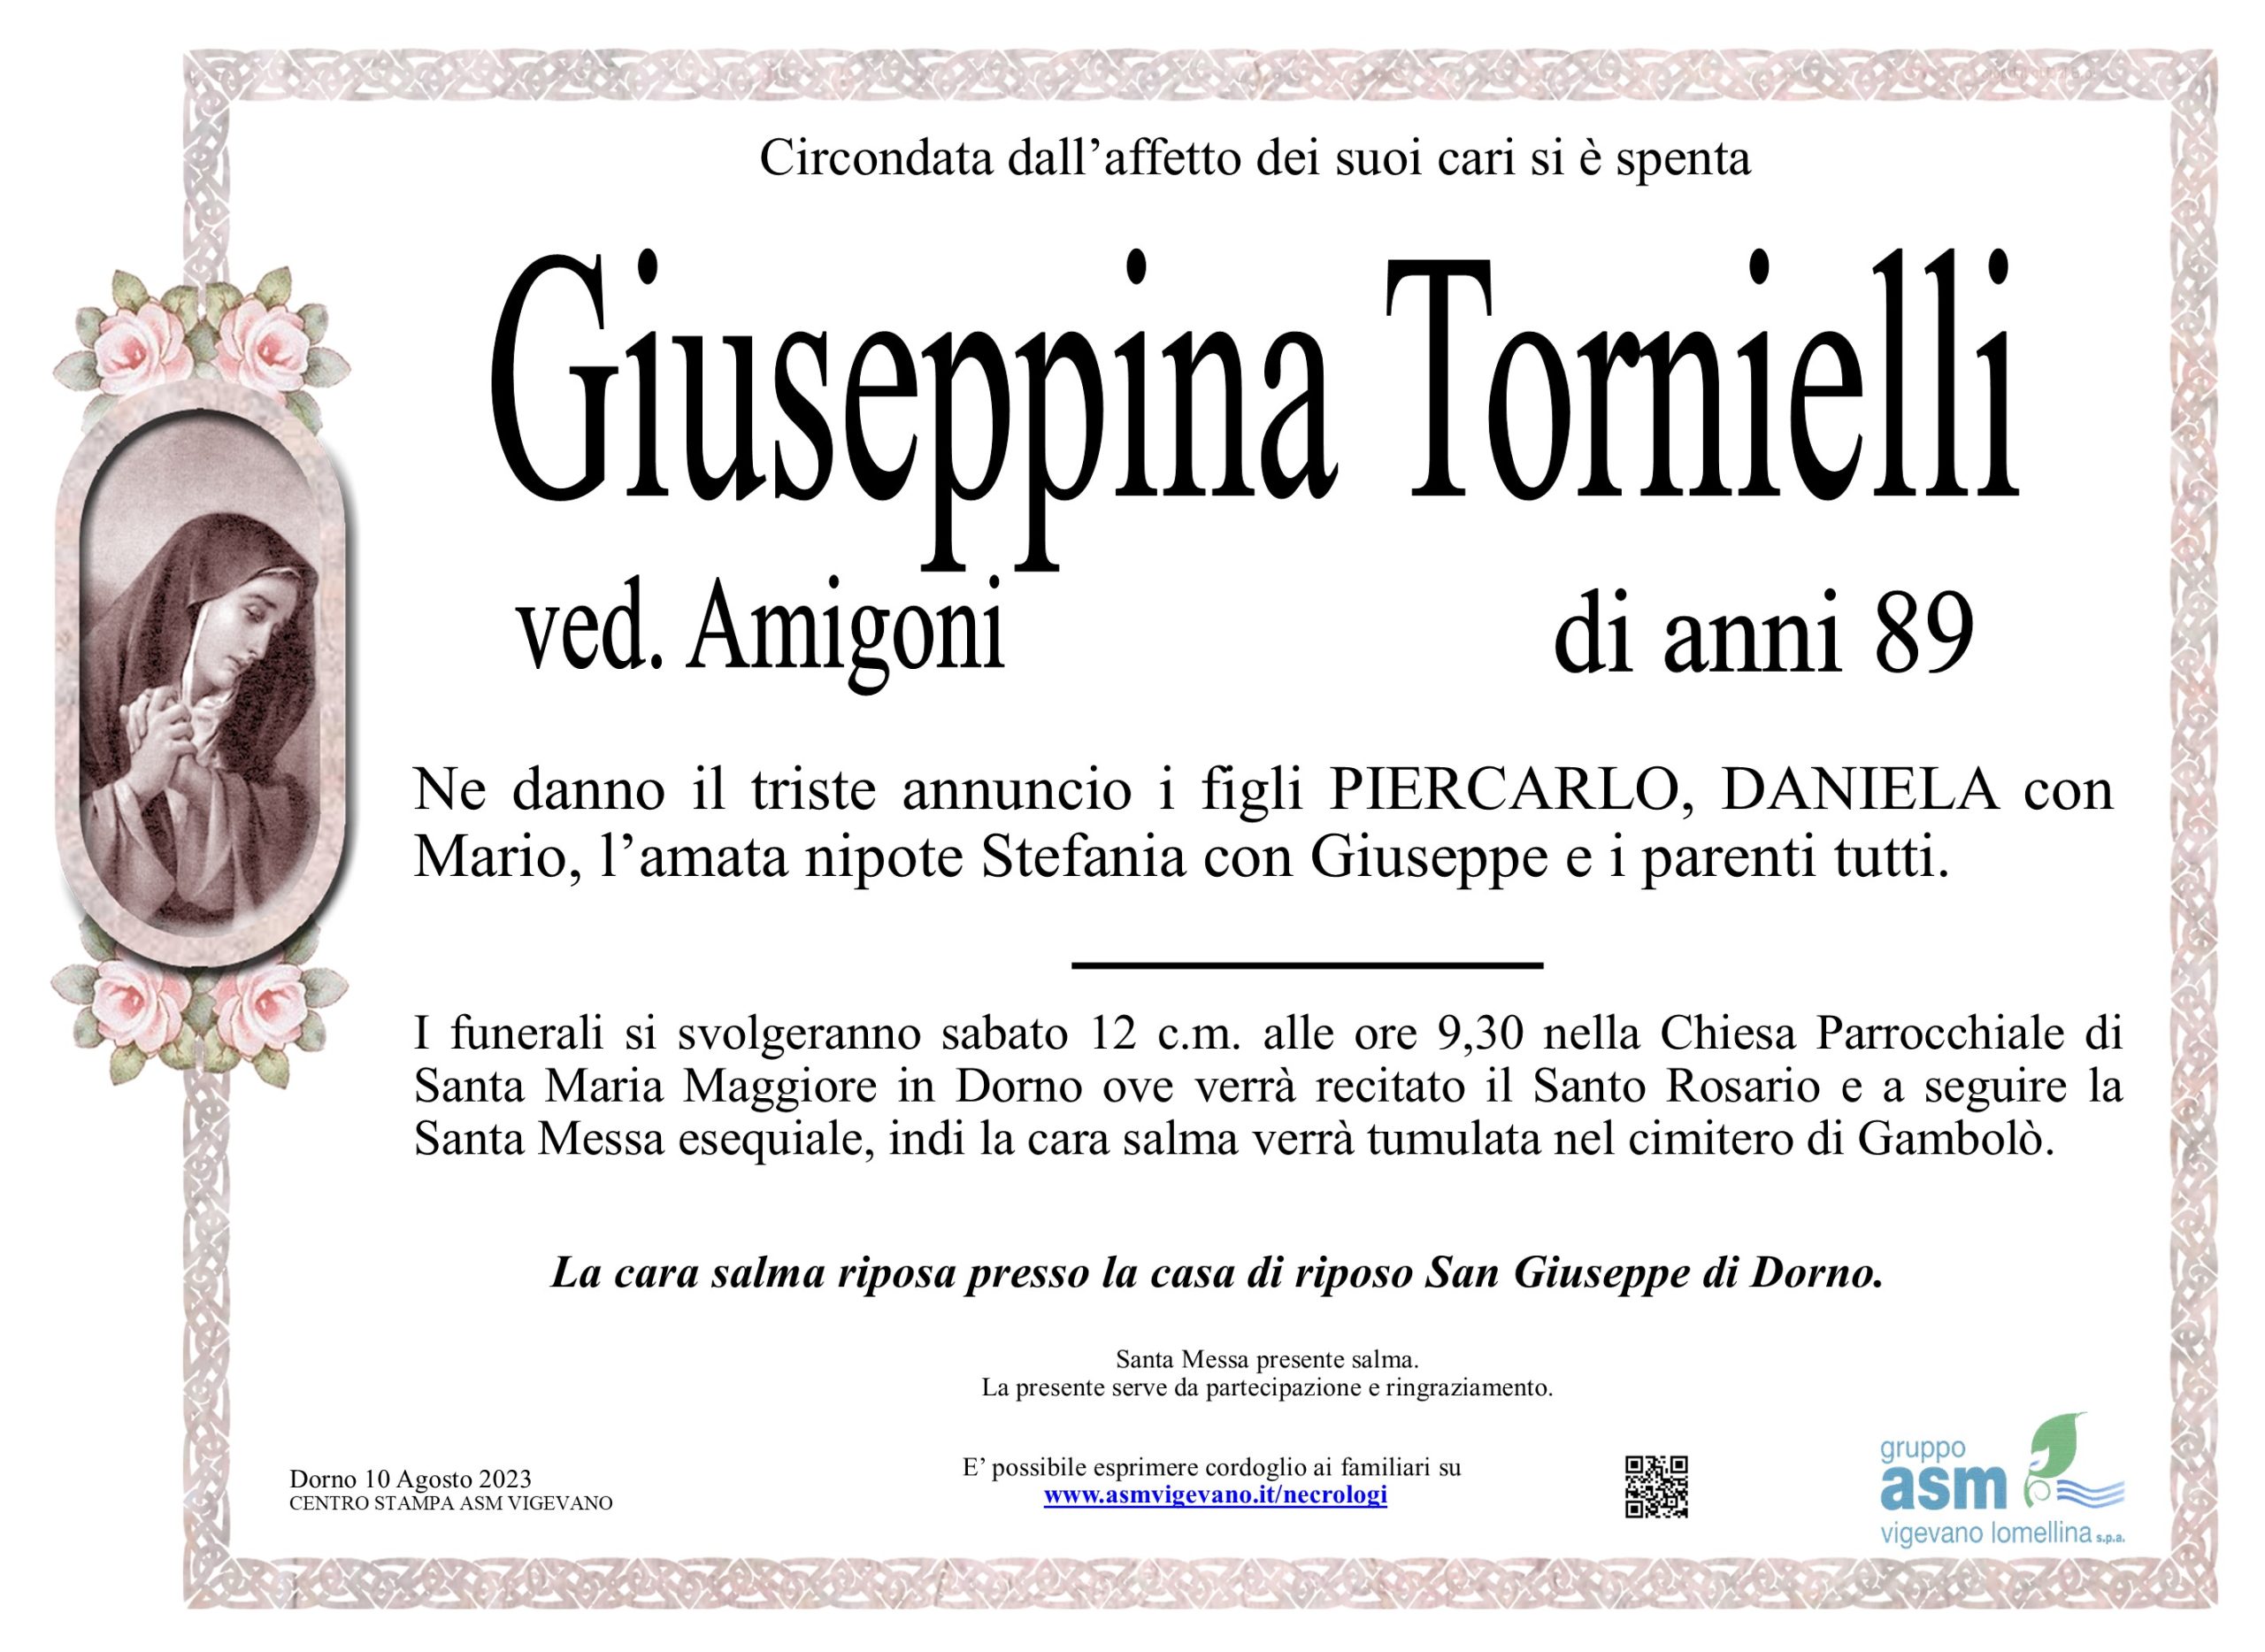 Giuseppina Tornielli